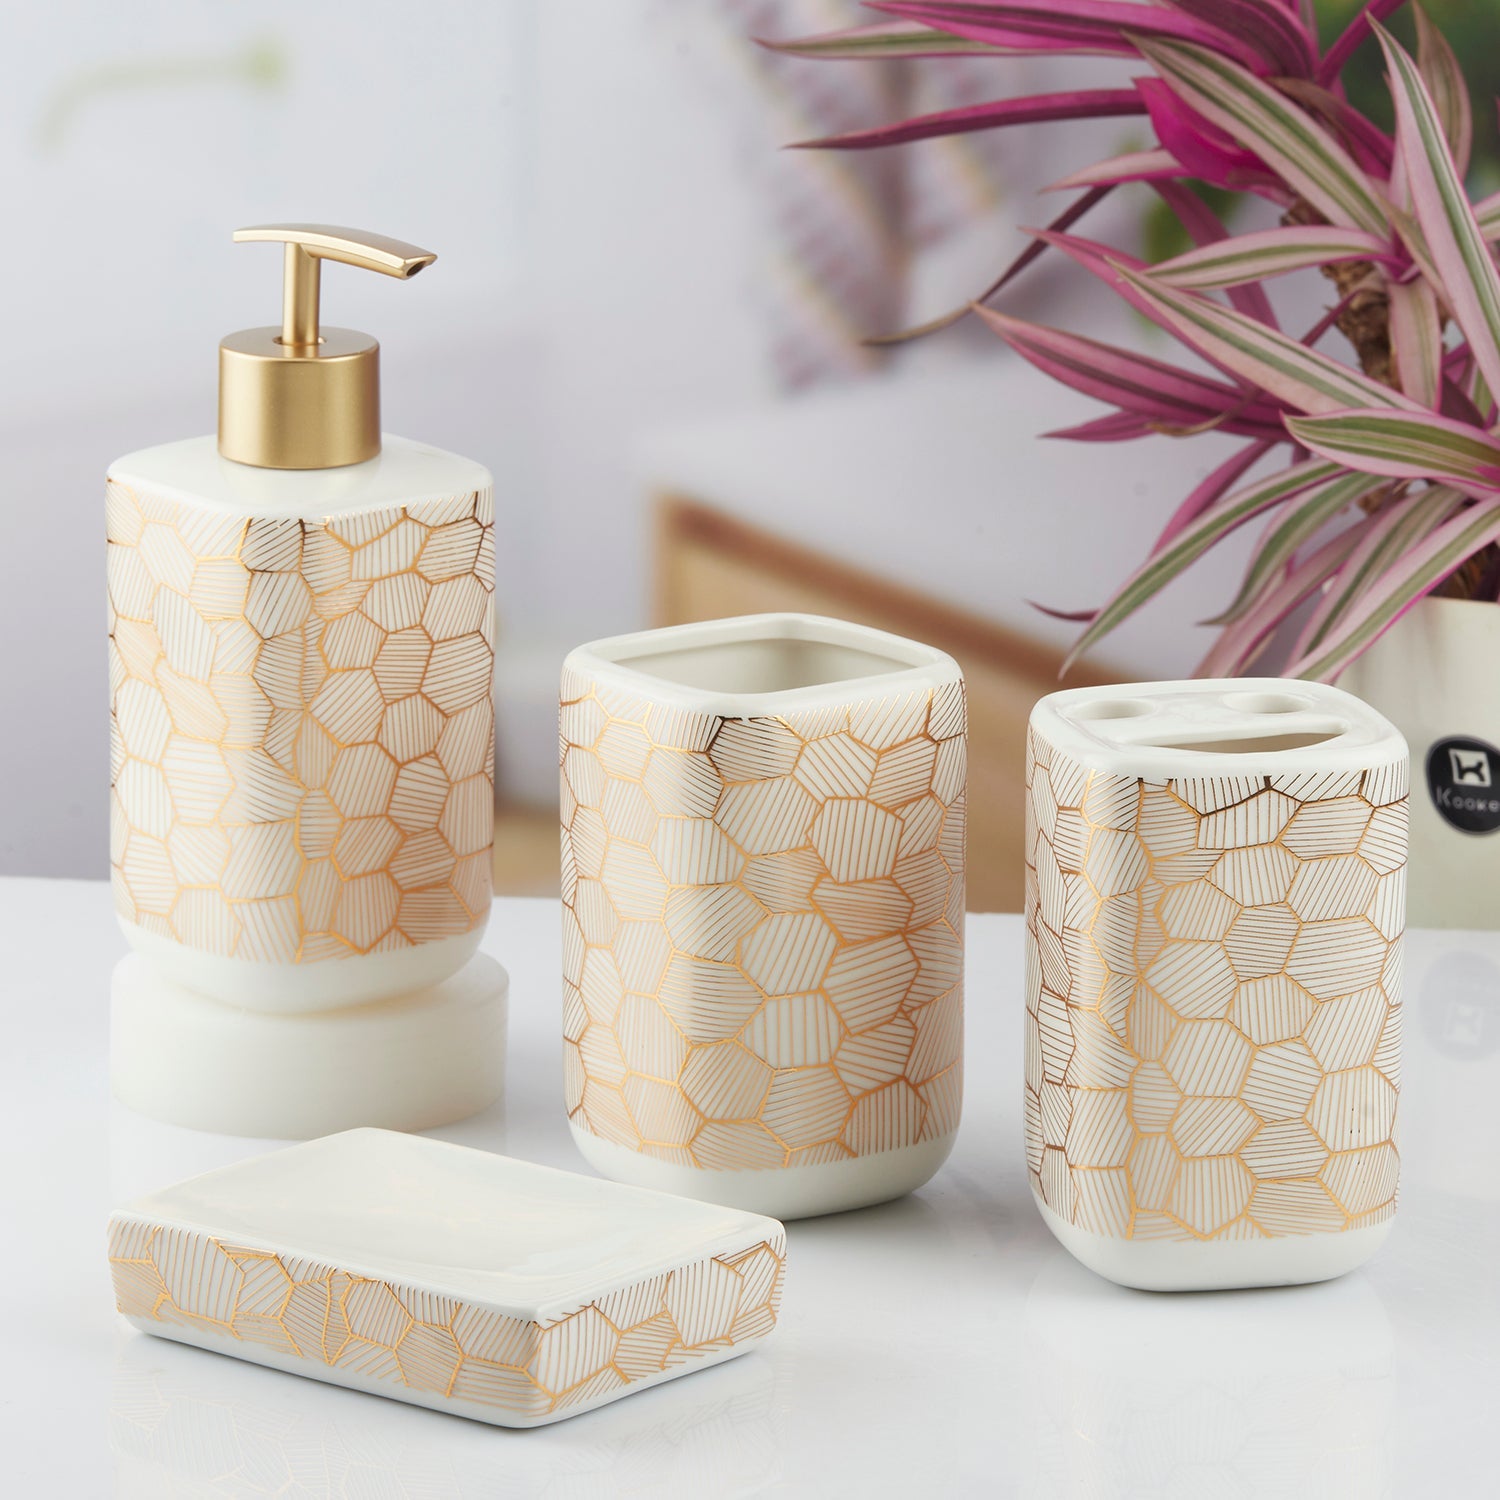 Ceramic Bathroom Set of 4 with Soap Dispenser (10459)